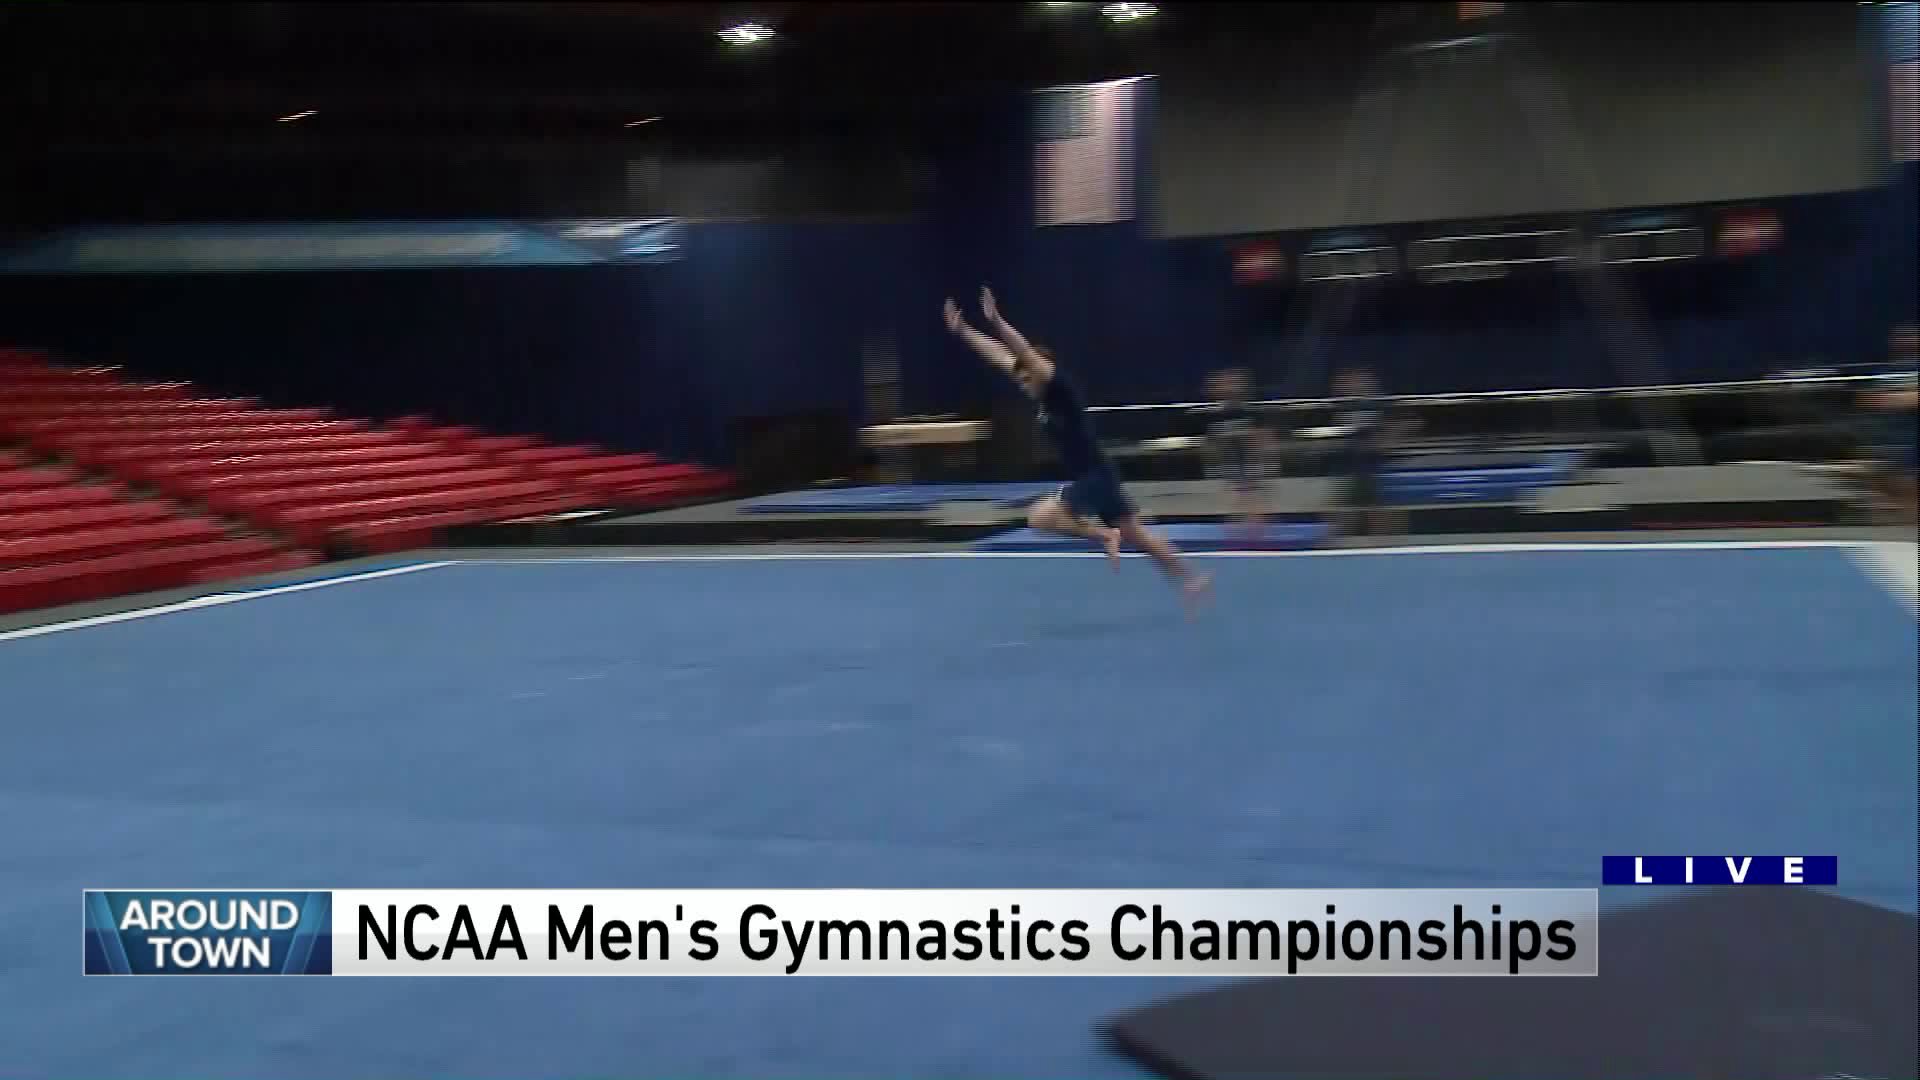 Around Town previews the NCAA Men’s Gymnastics Championship